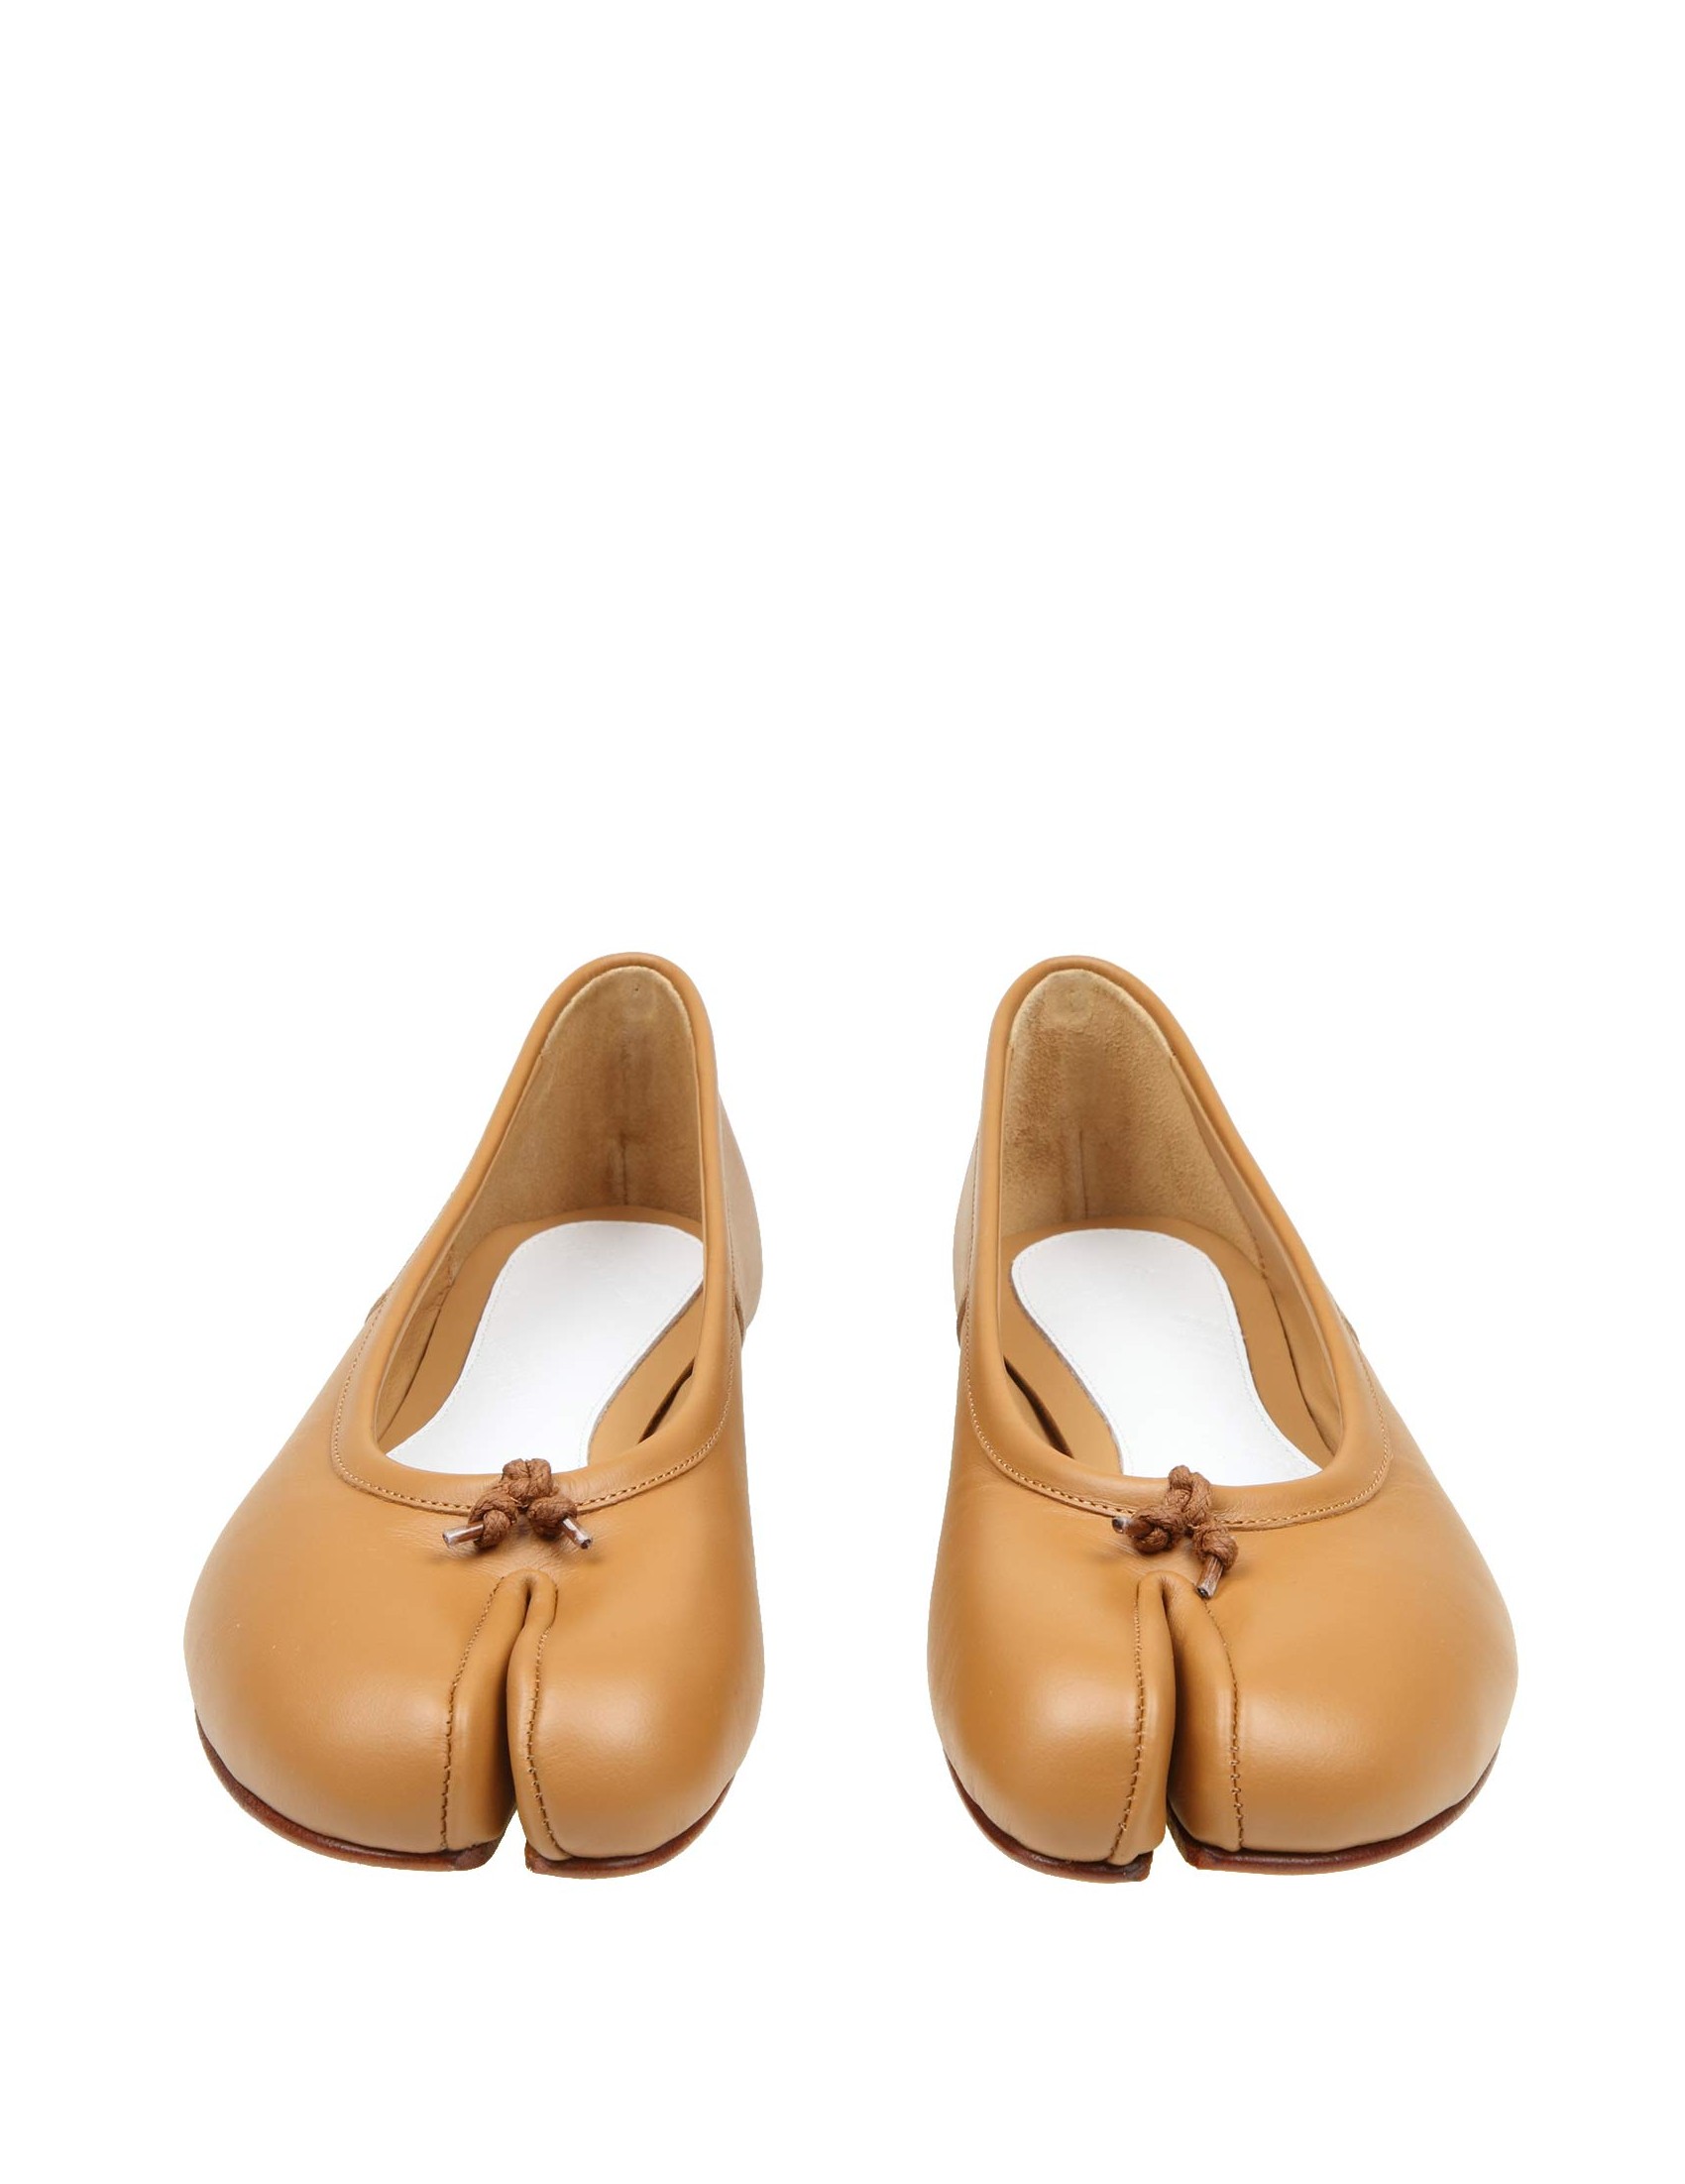 MAISON MARGIELA Women's Shoes Ballerinas Leather NIB Authentic 36 37 37½ 38 39 . | eBay